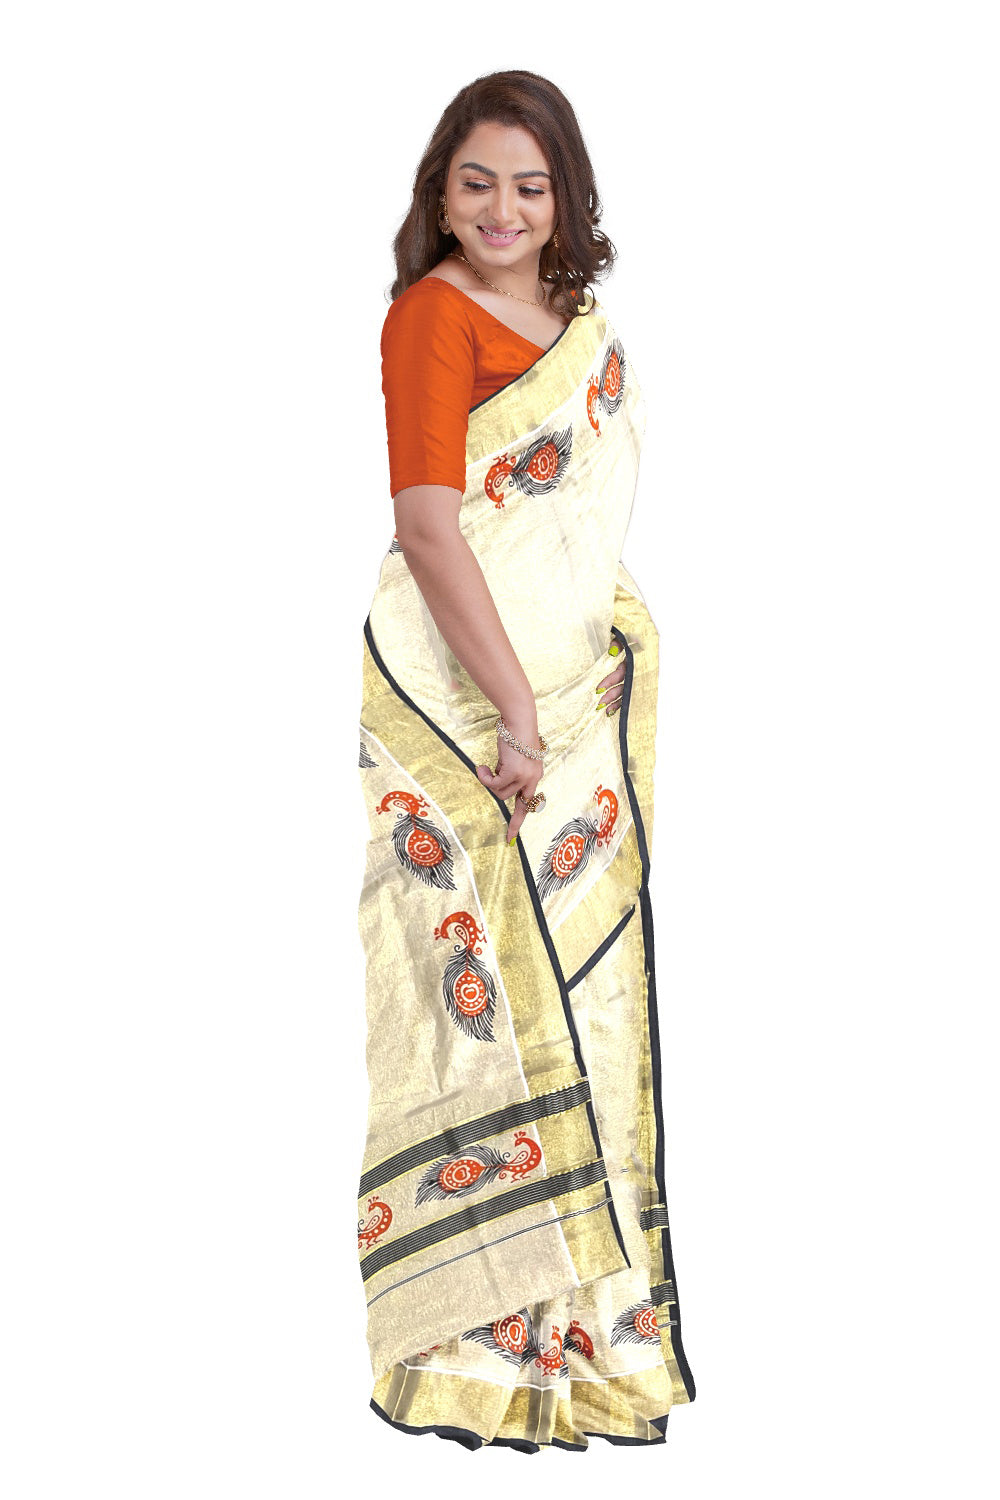 Kerala Tissue Kasavu Saree with Black and Orange Peacock Block Printed Design